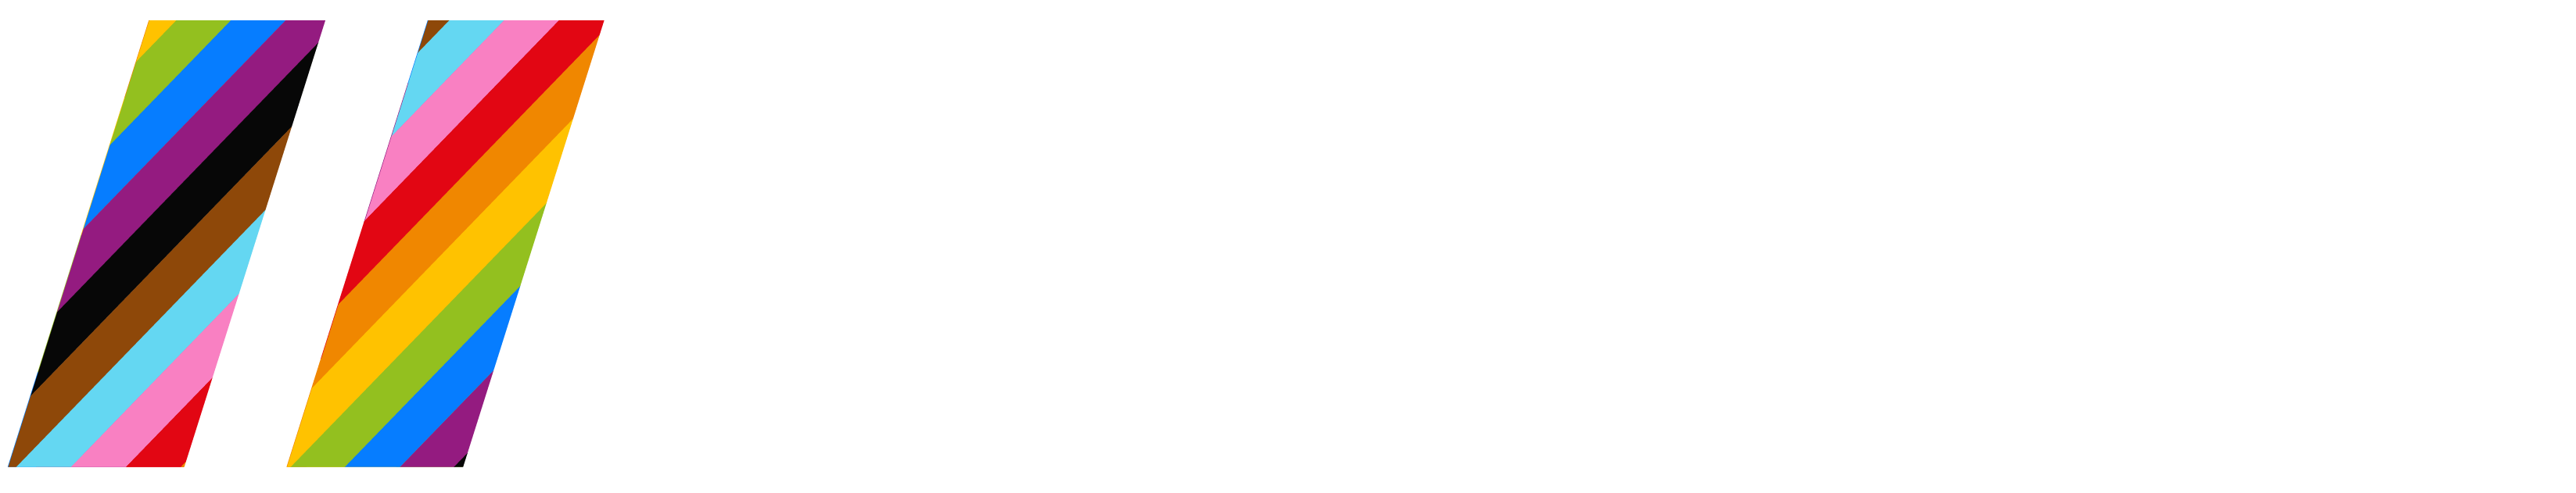 Howden Broking Group logo